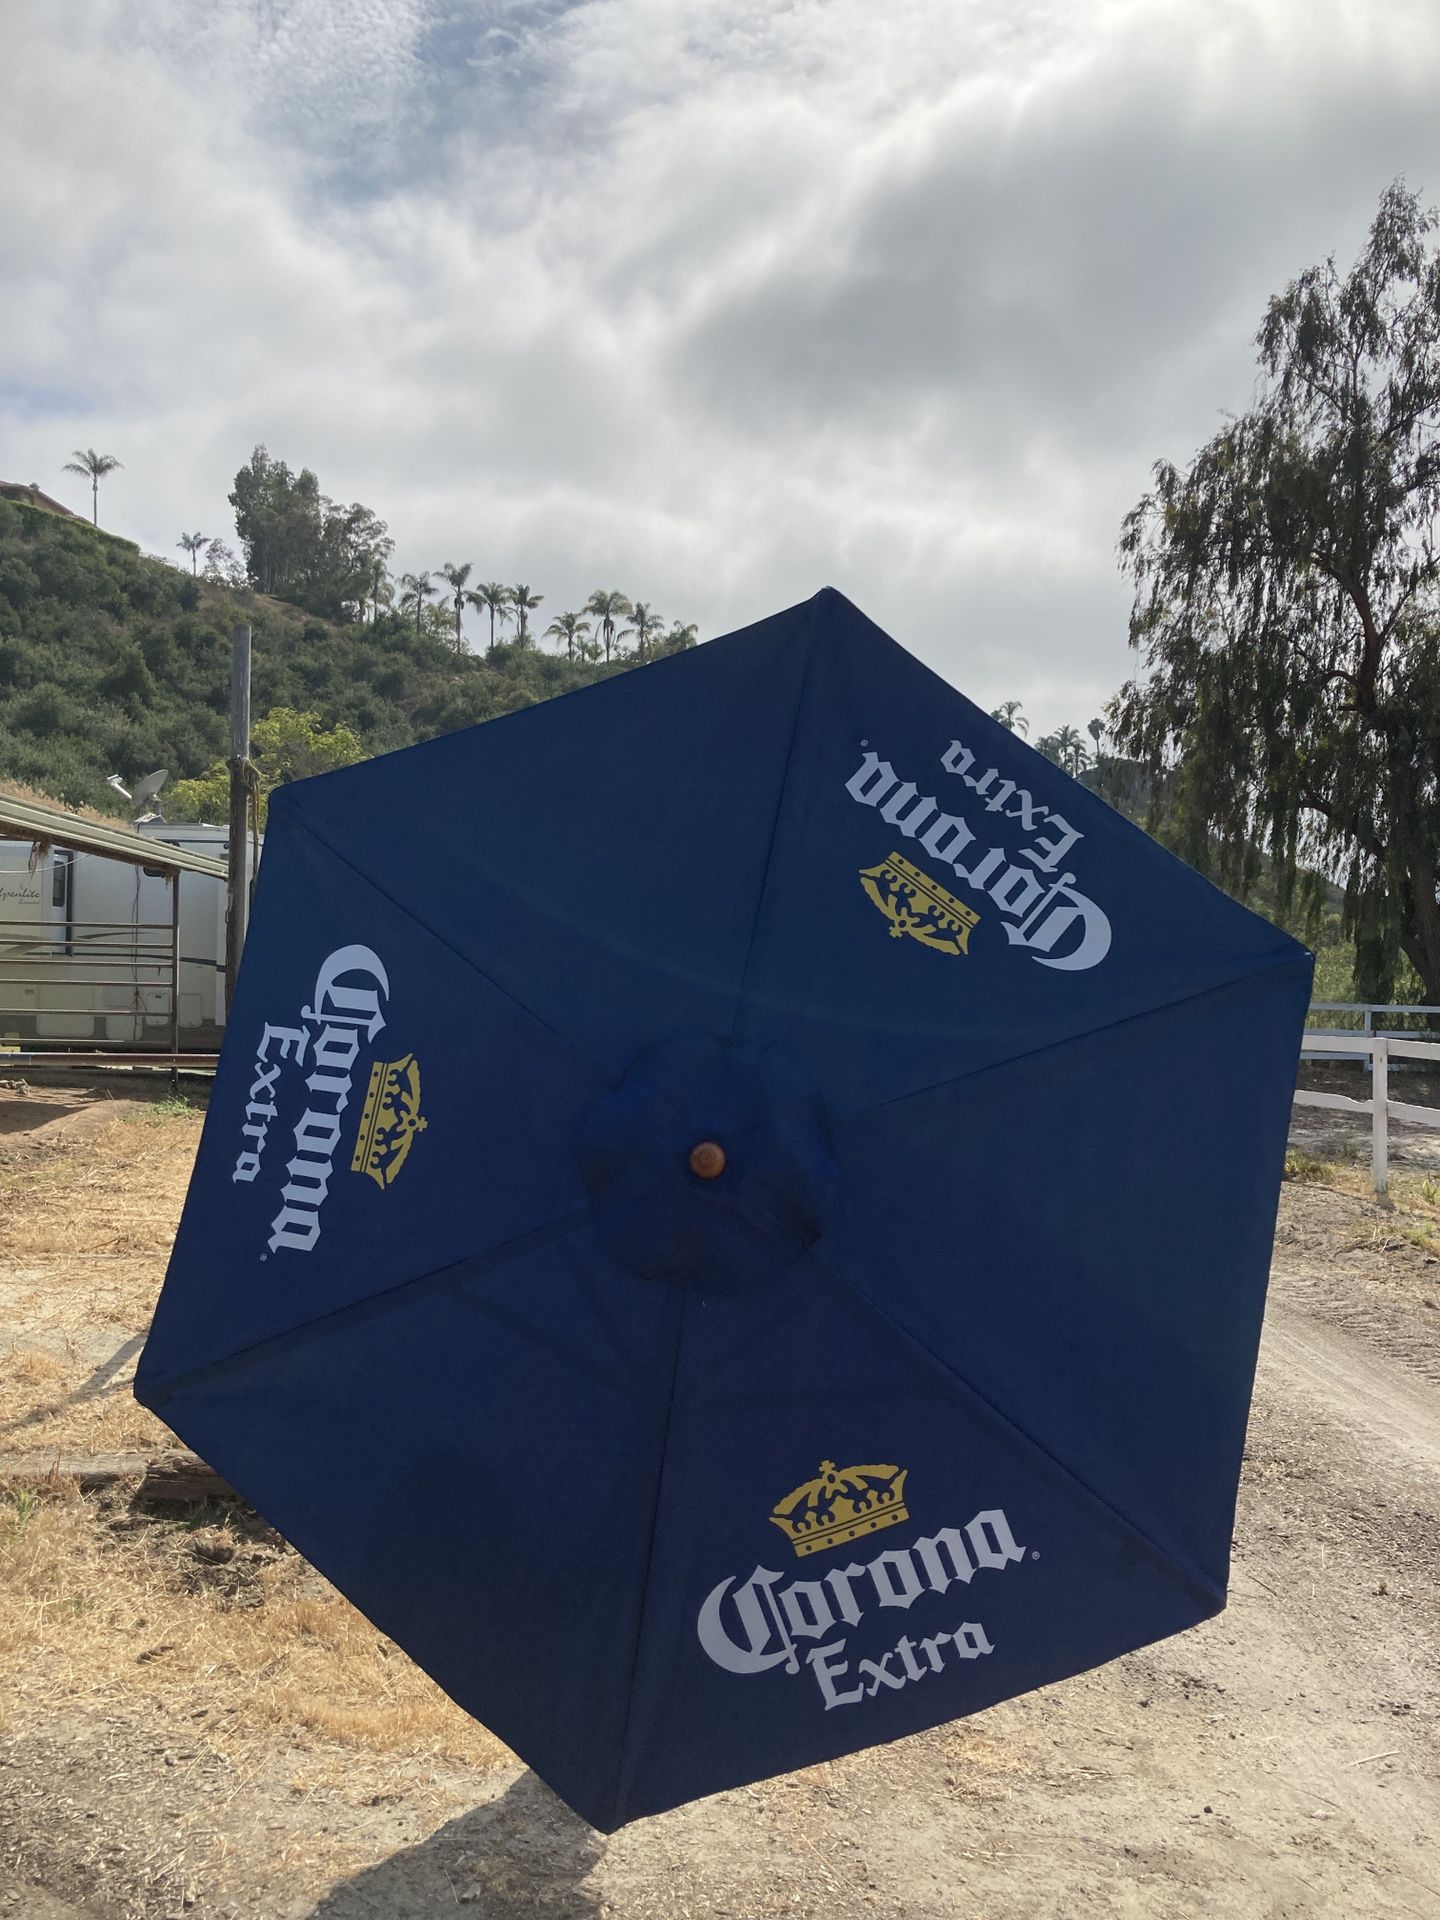 Industry Sized Umbrella (corona Beer)